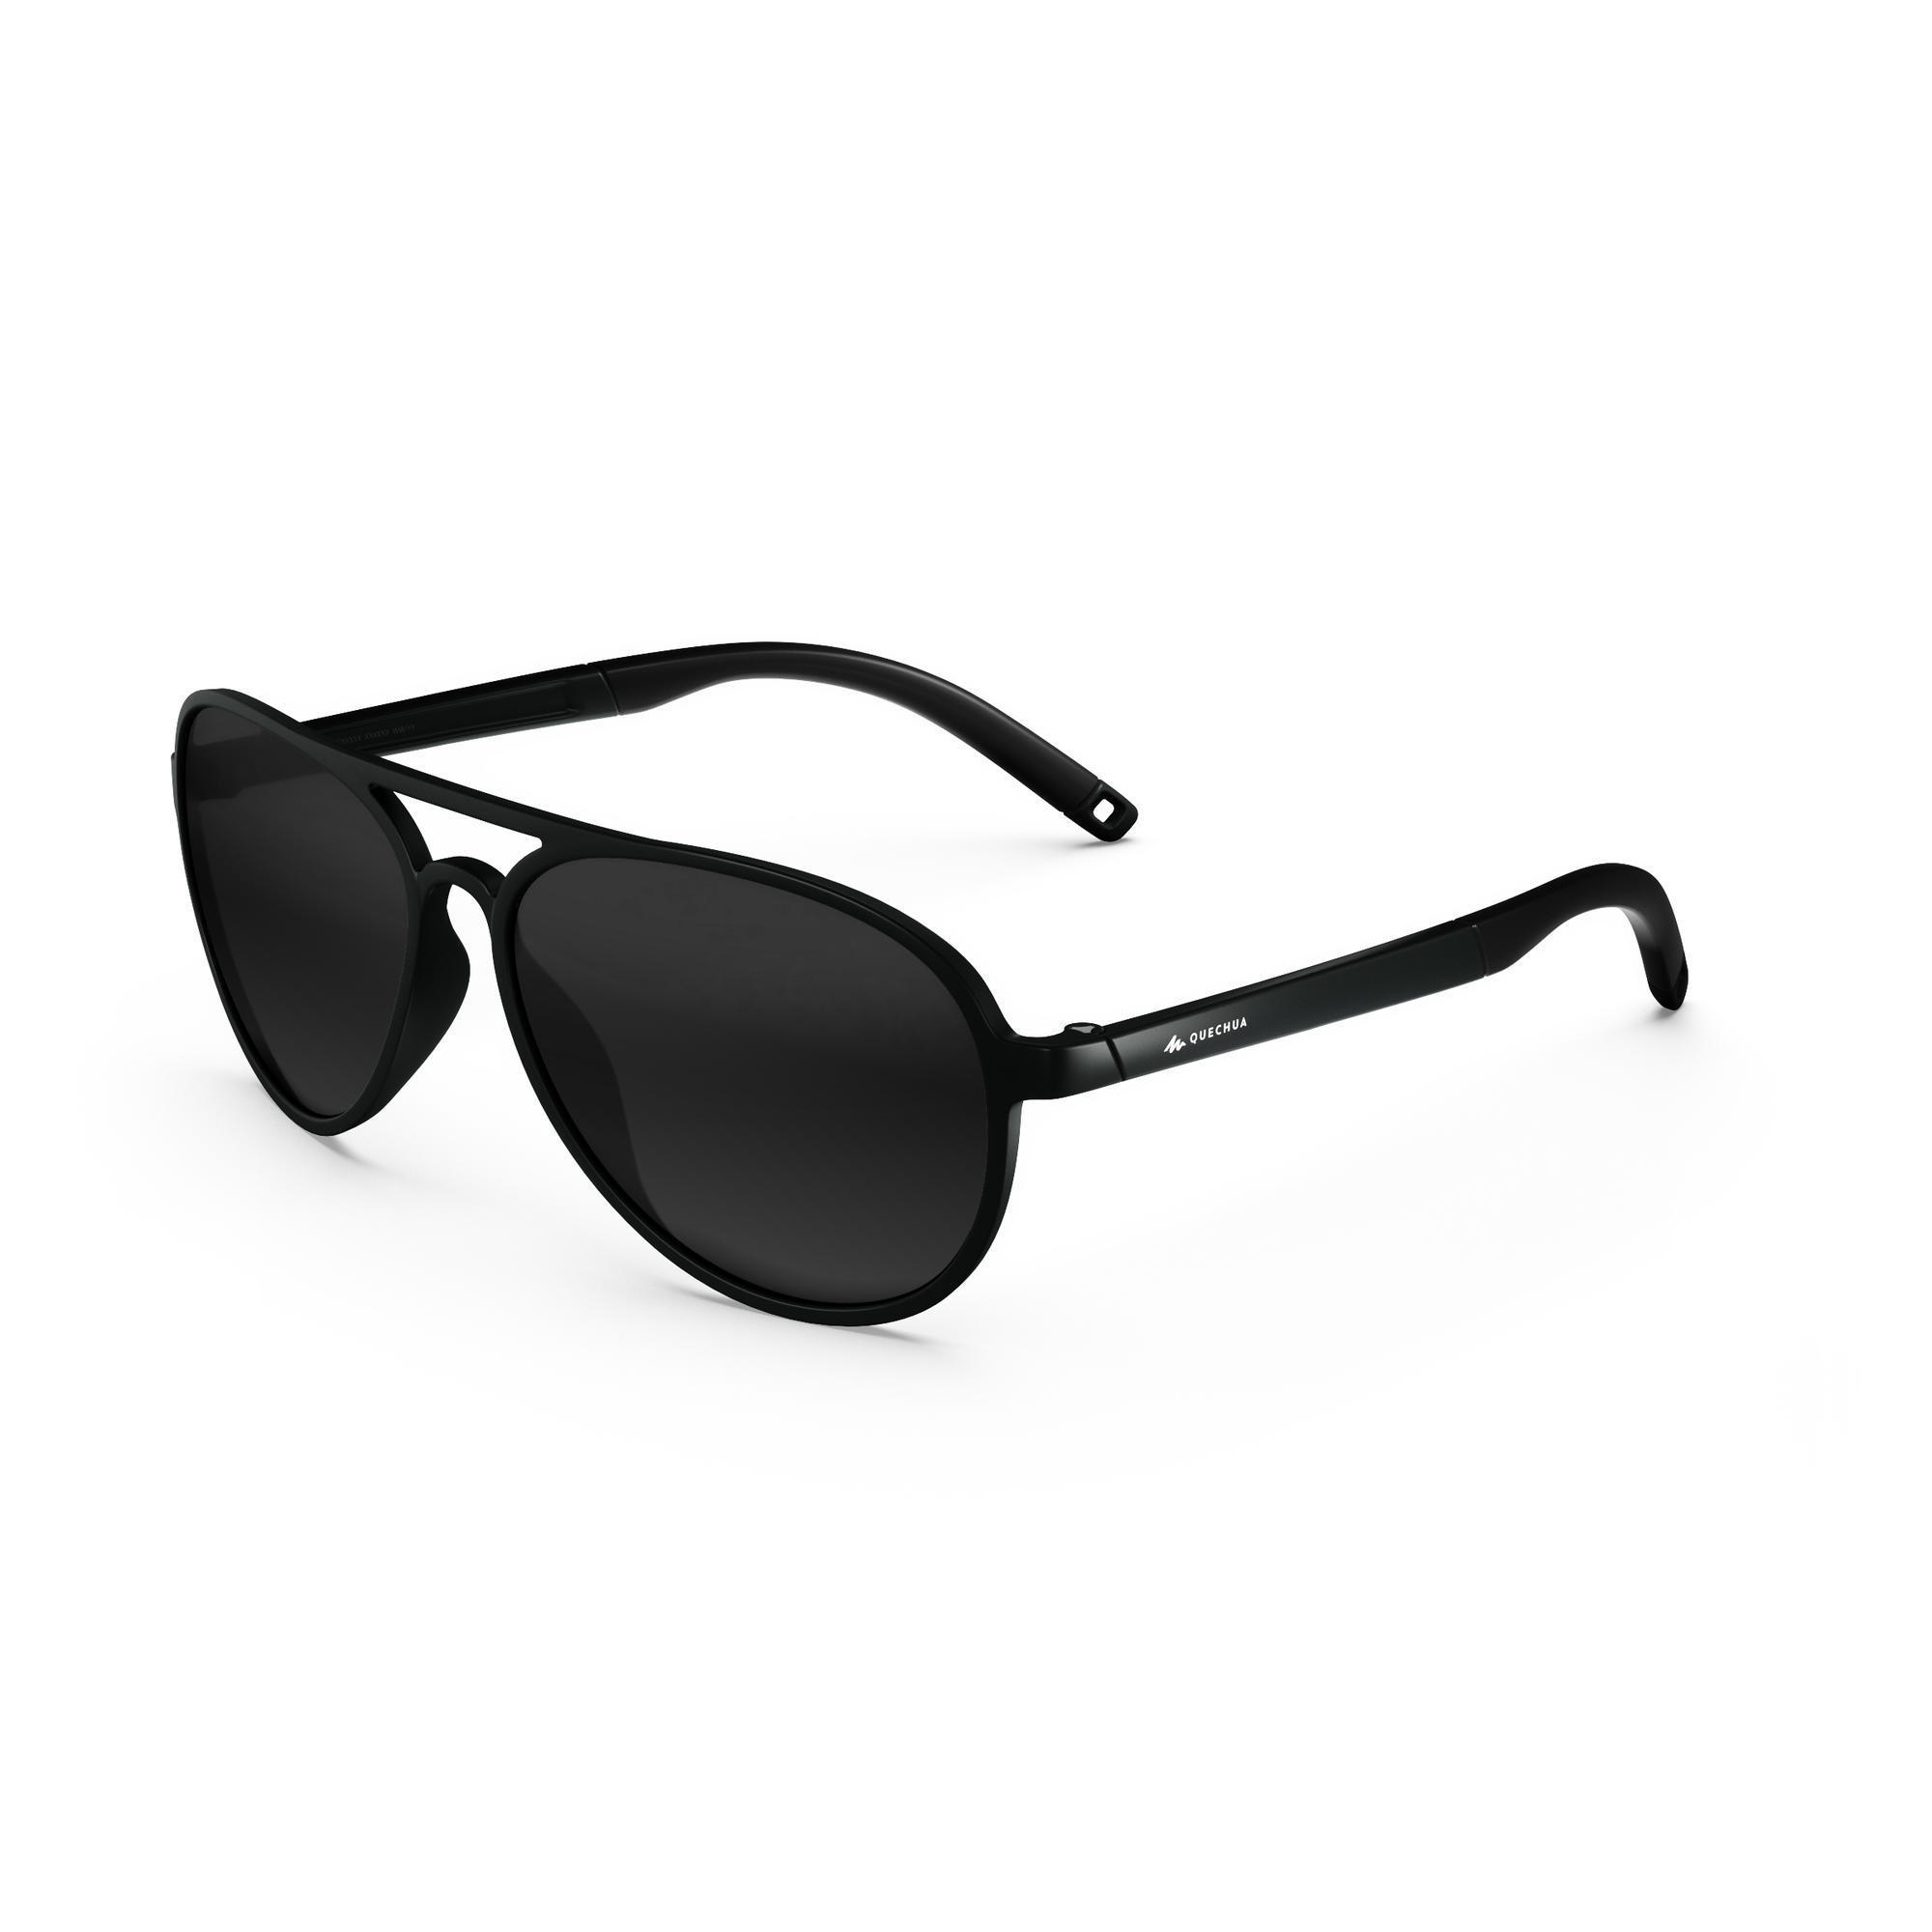 decathlon polarised sunglasses